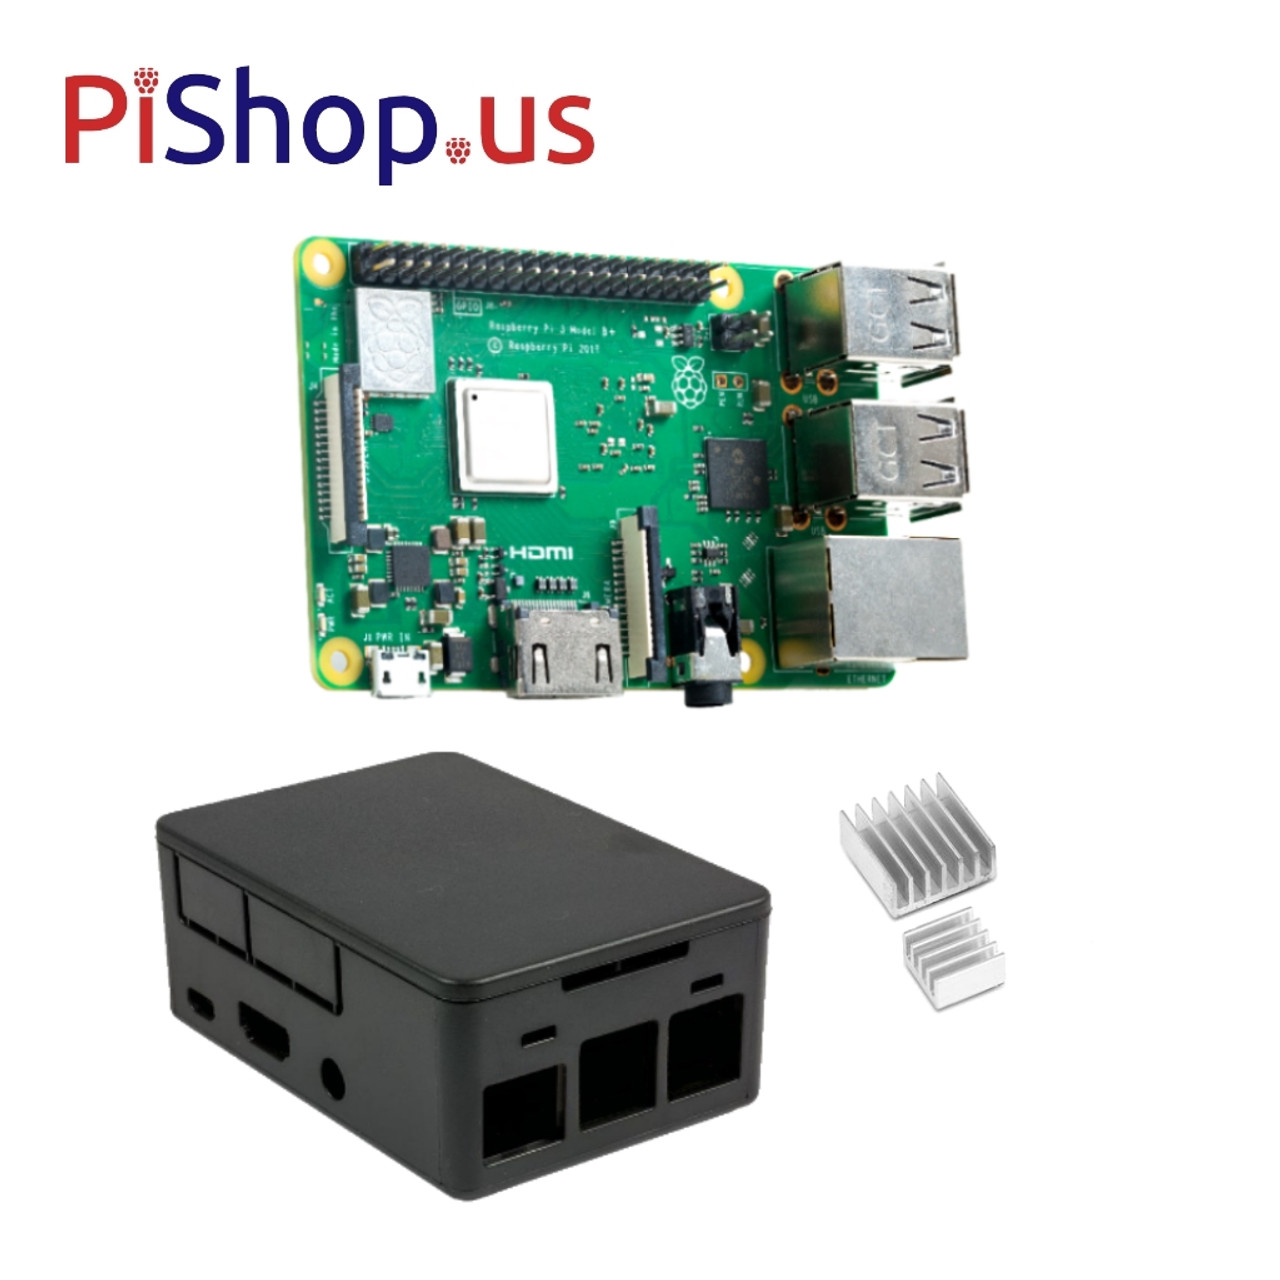 Raspberry Pi 3 modèle B +, Original Pi3 B Plus Pi 3B avec WiFi et Bluetooth